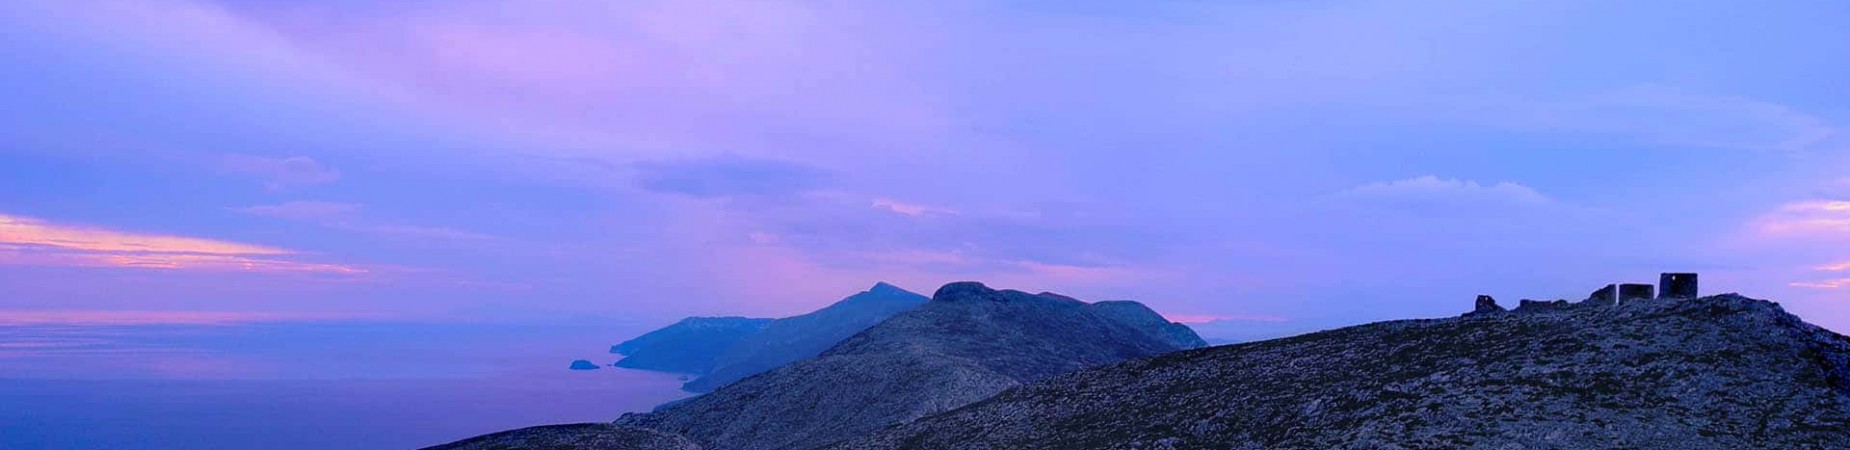 Amorgos mountain